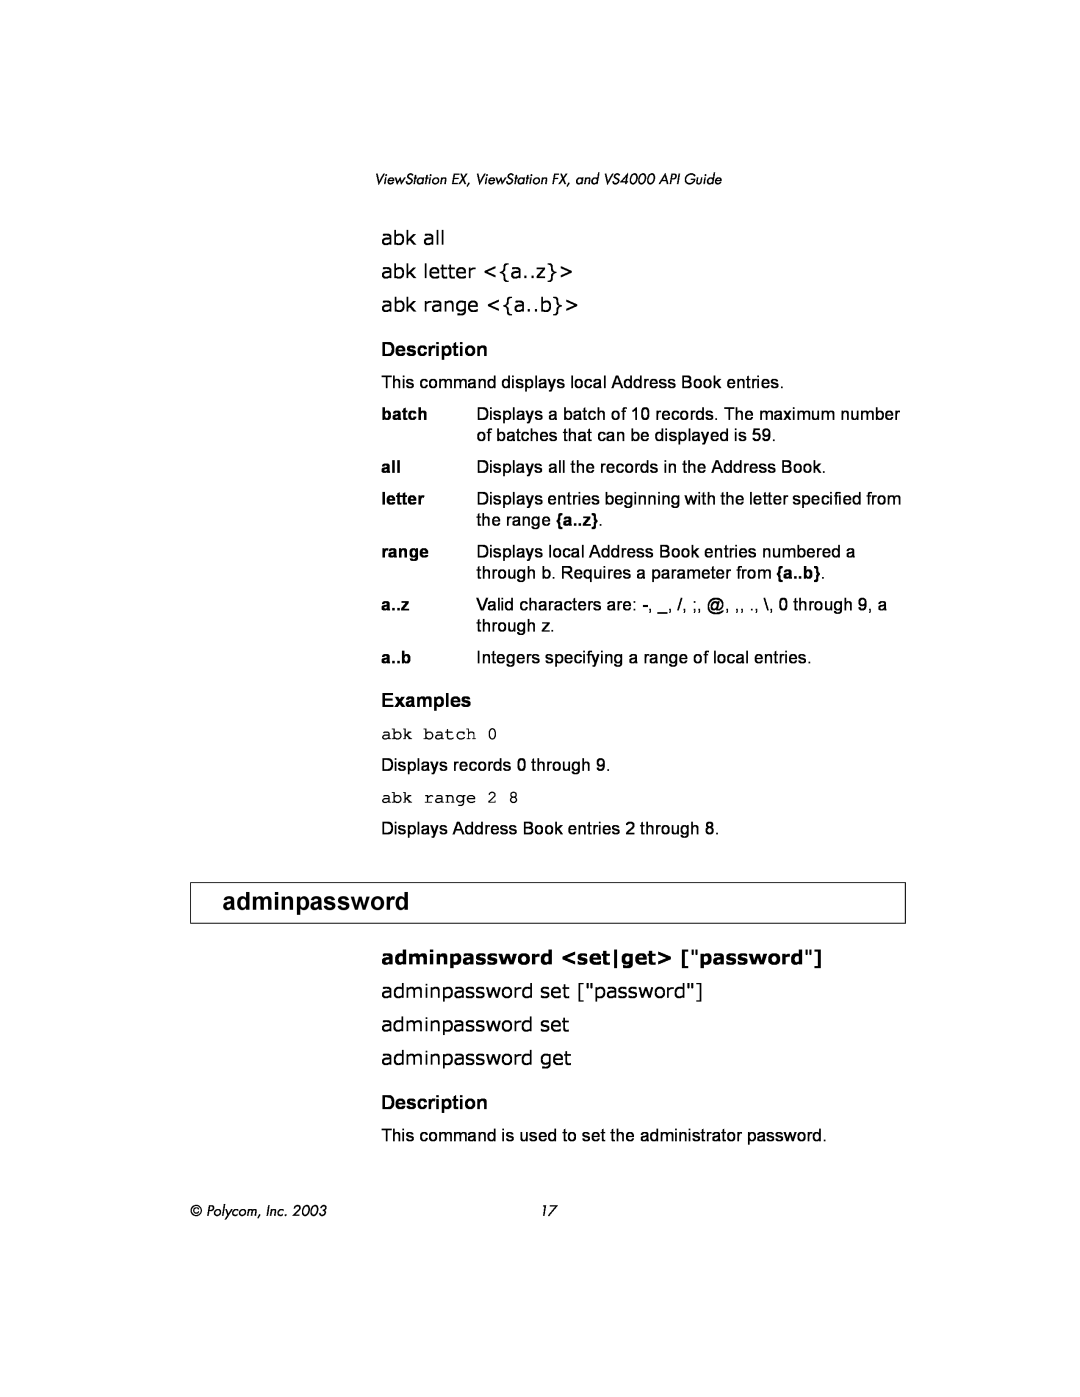 Polycom VIEWSTATION EX manual adminpassword, abk all abk letter <a..z> abk range <a..b>, Examples, Description, batch 